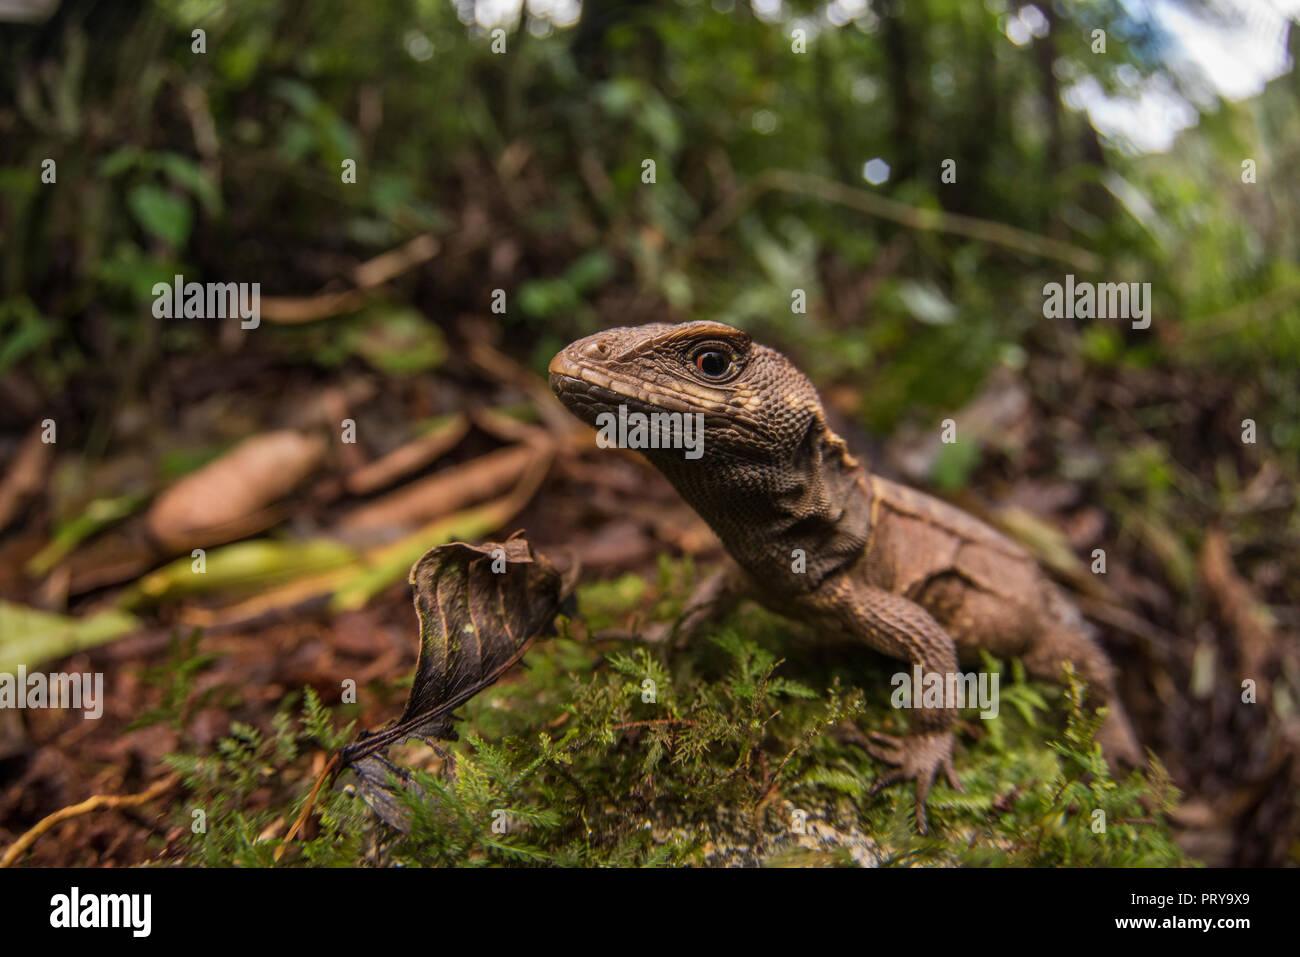 A rose whorltail iguana (Stenocercus roseiventris) a rare ground dwelling lizard species found in the Amazon rainforest. Stock Photo